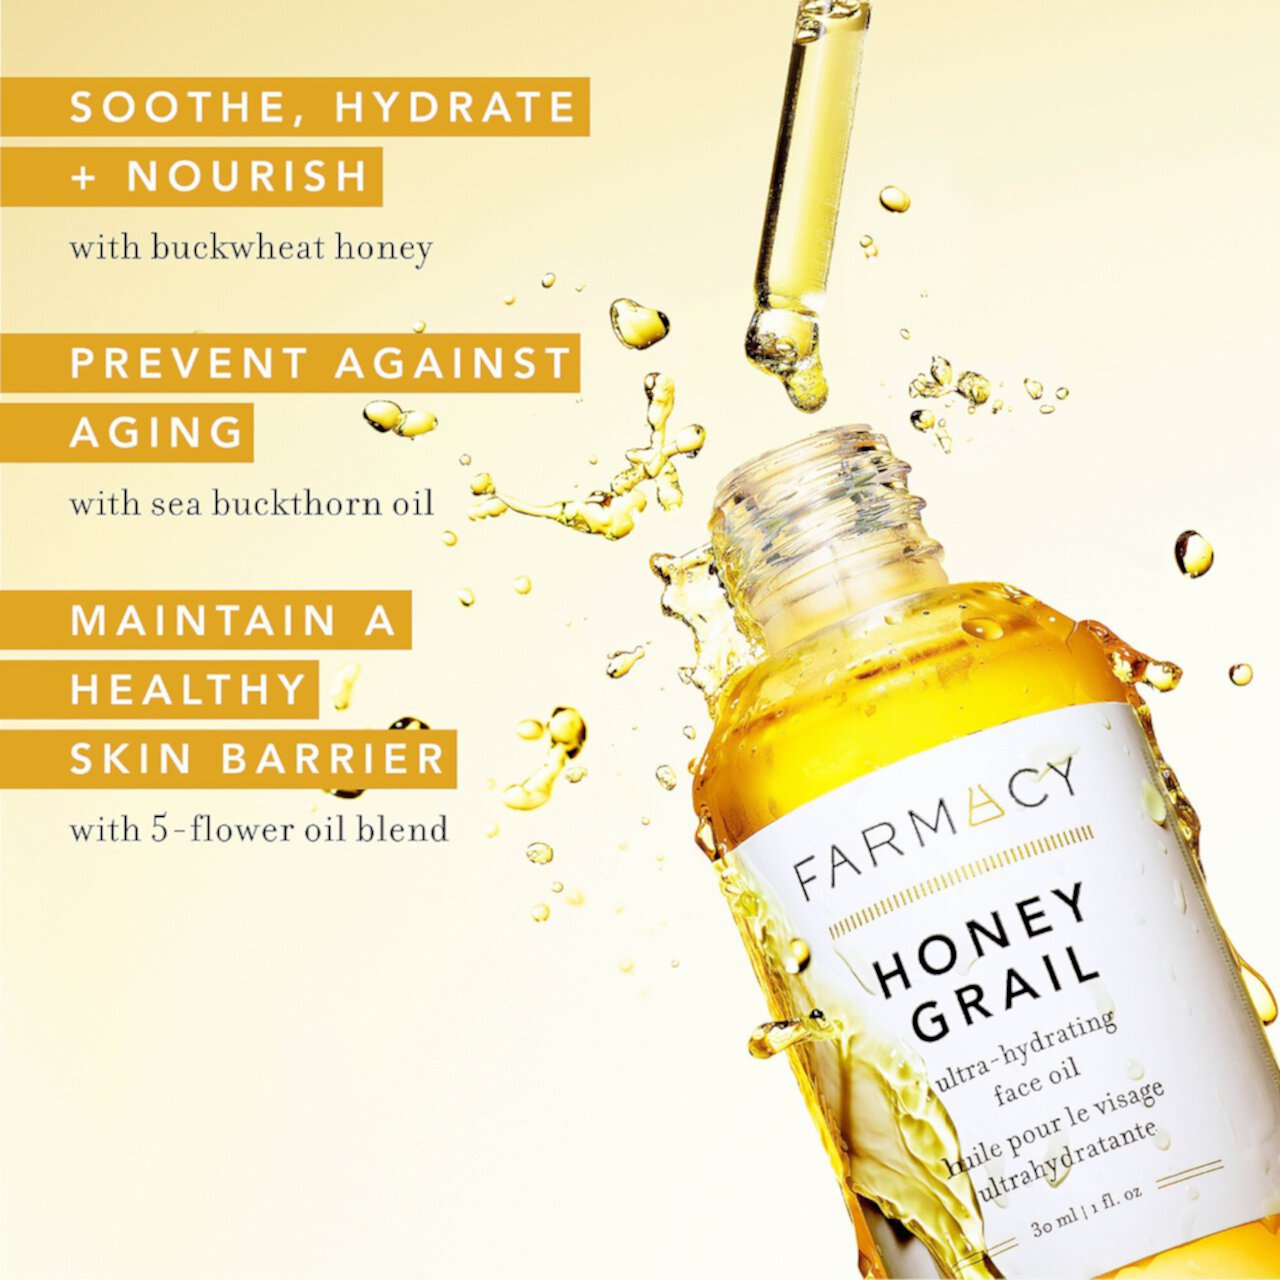 Ультраувлажняющее масло для лица Honey Grail Farmacy